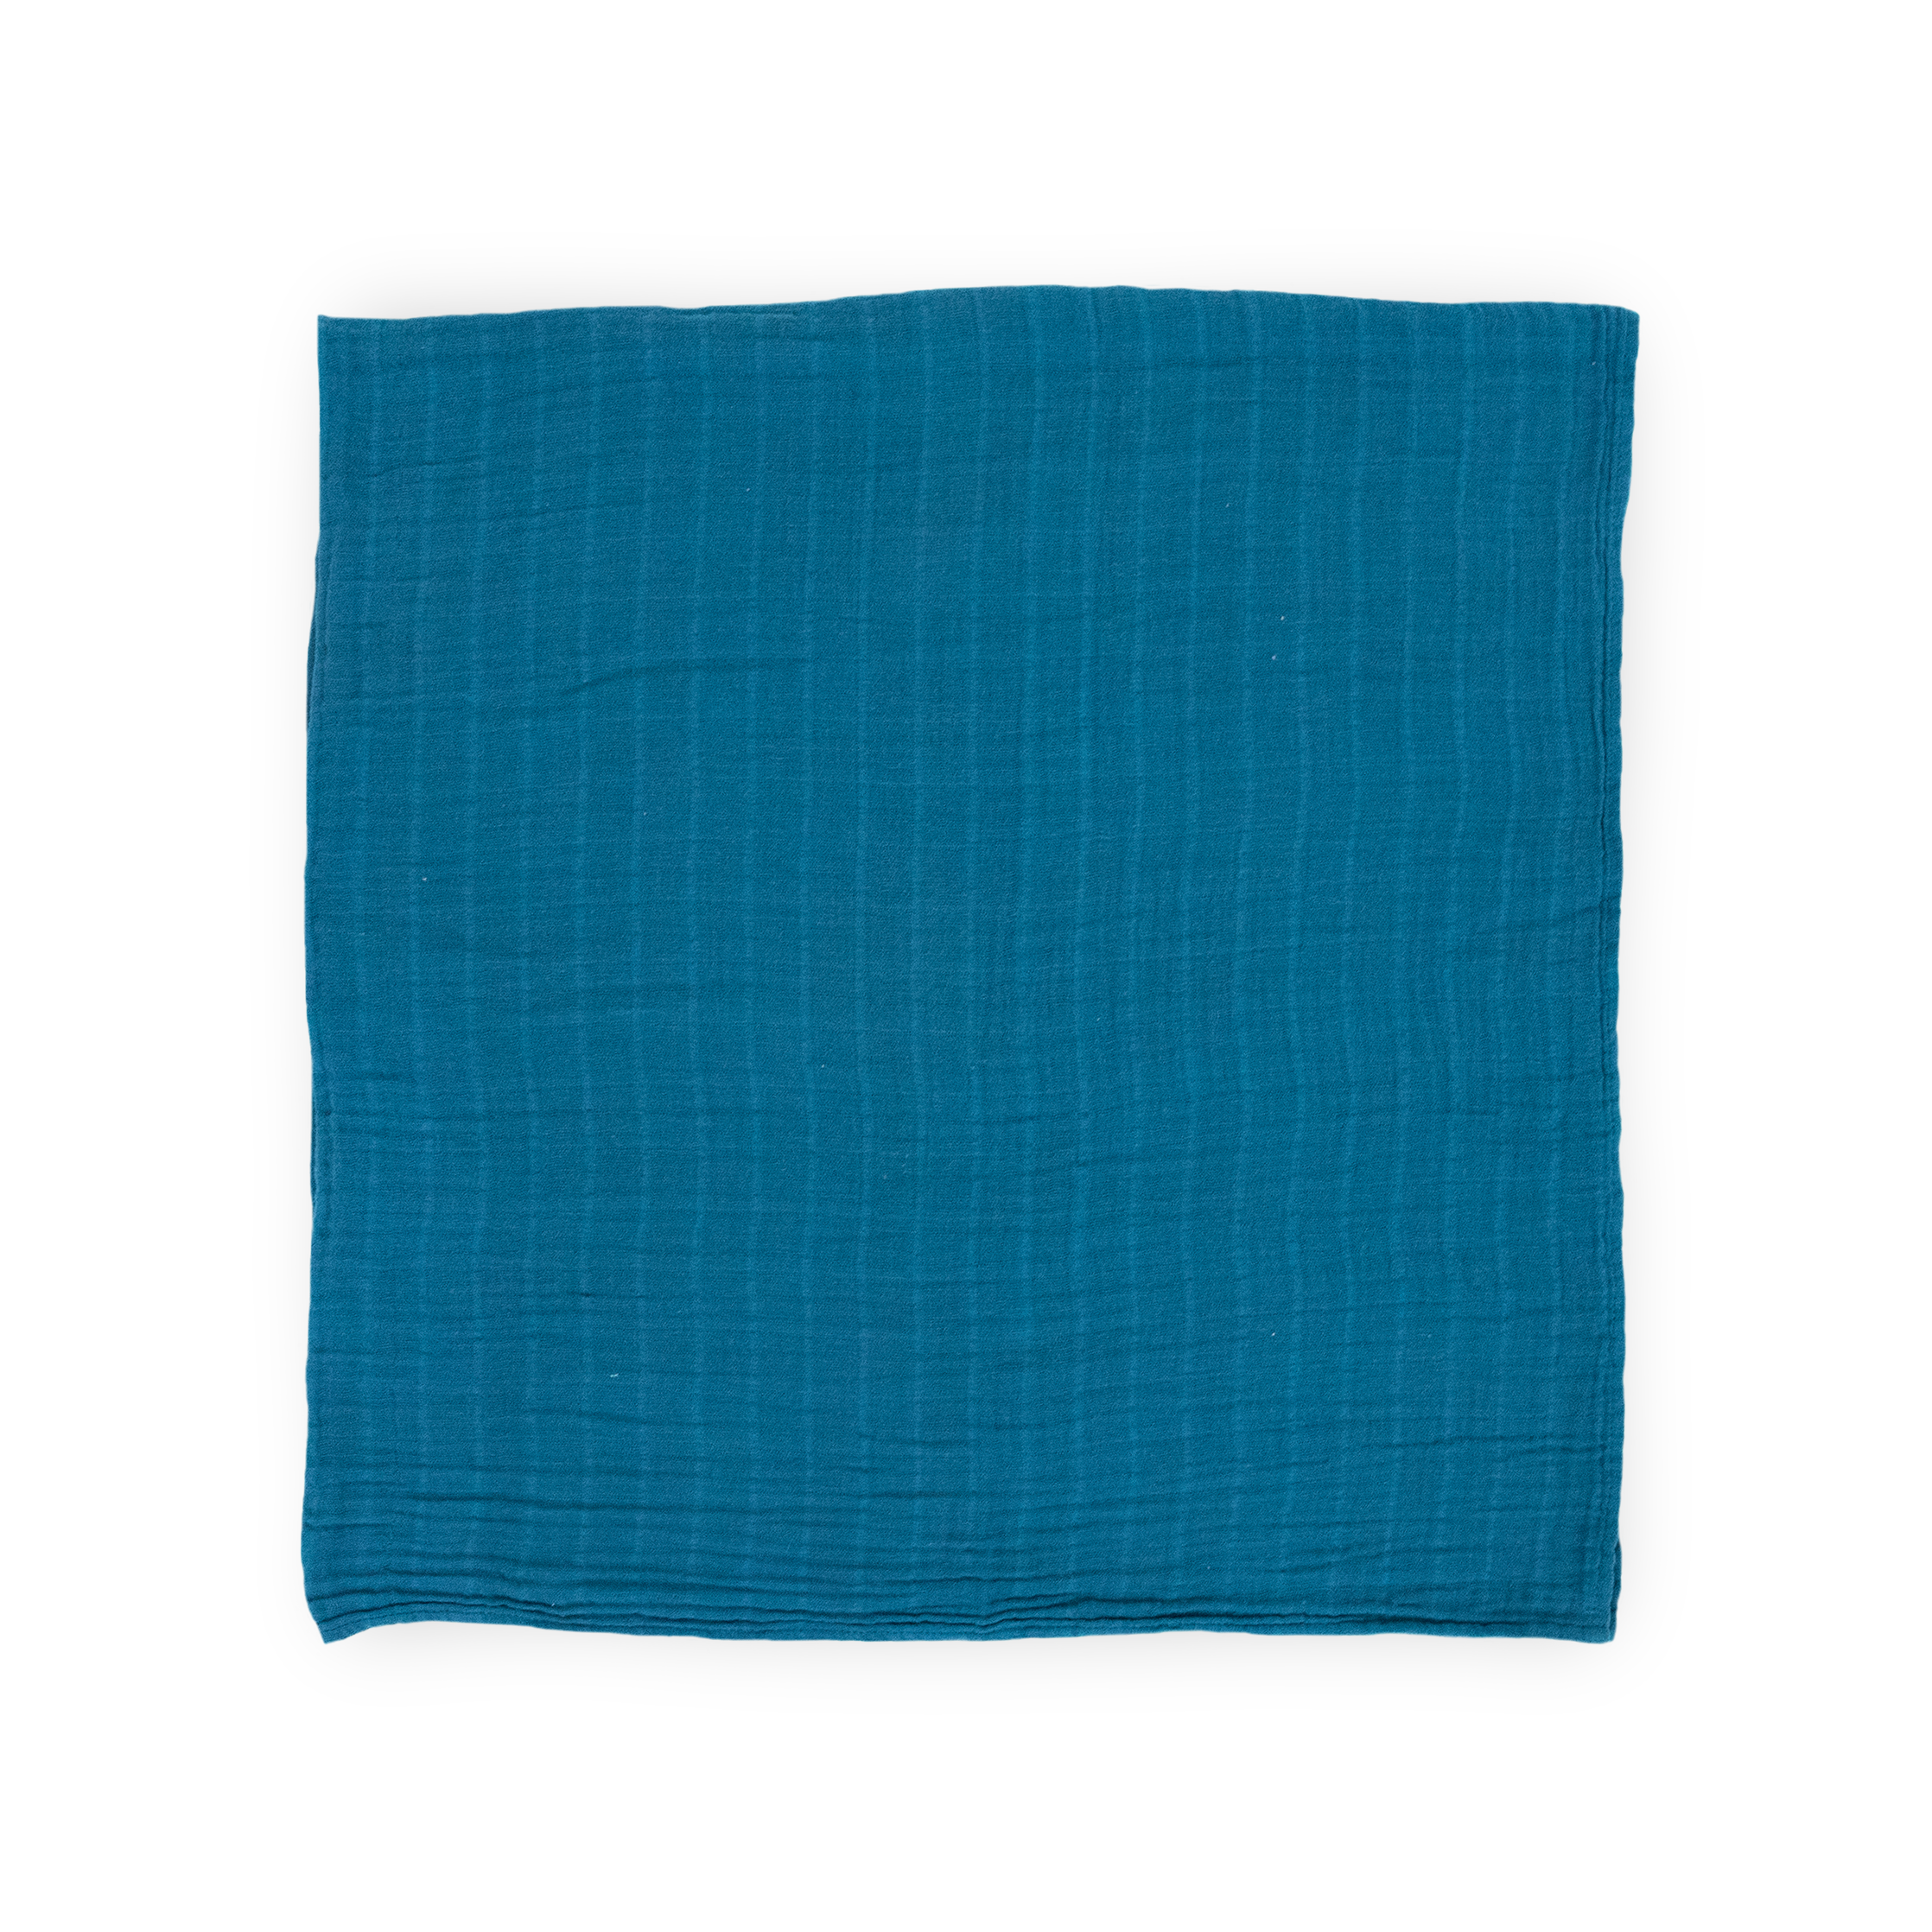 Cotton Muslin Swaddle Blanket 3 Pack - Lake